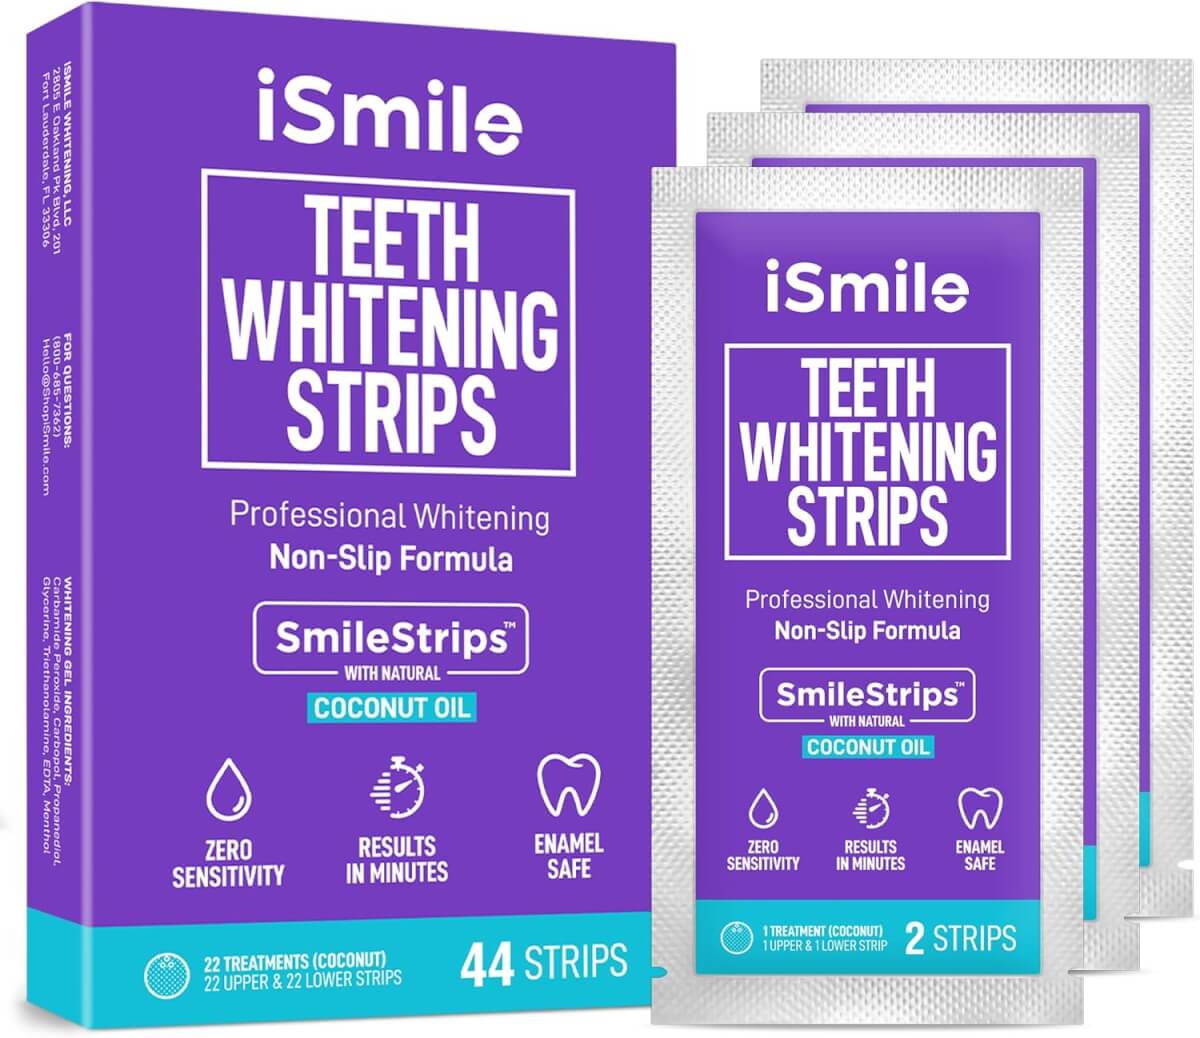 iSmile Teeth Whitening Strips